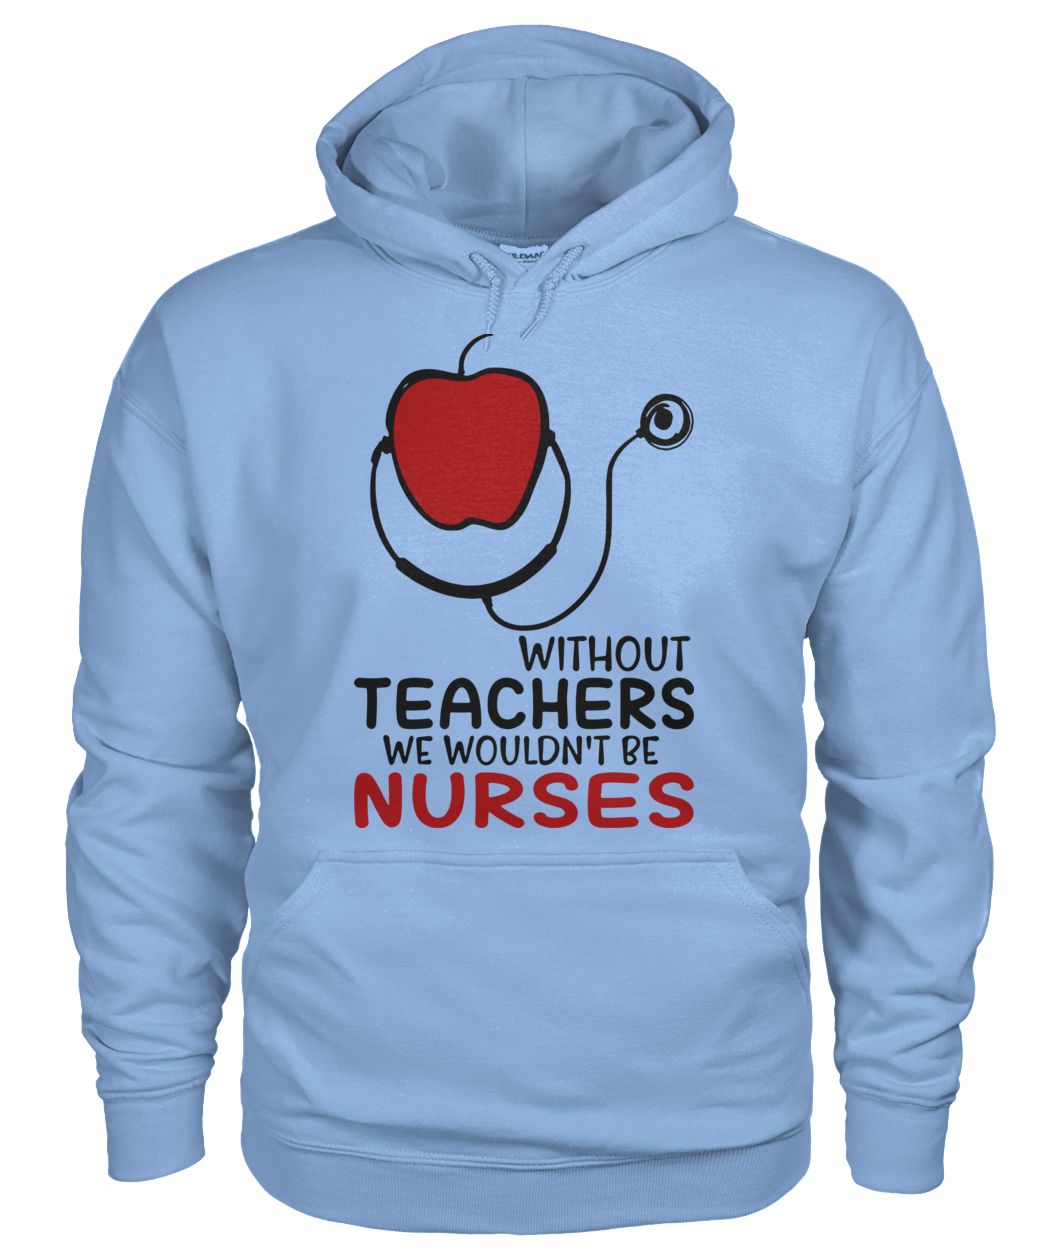 Without teachers we wouldn't be nurses gildan hoodie